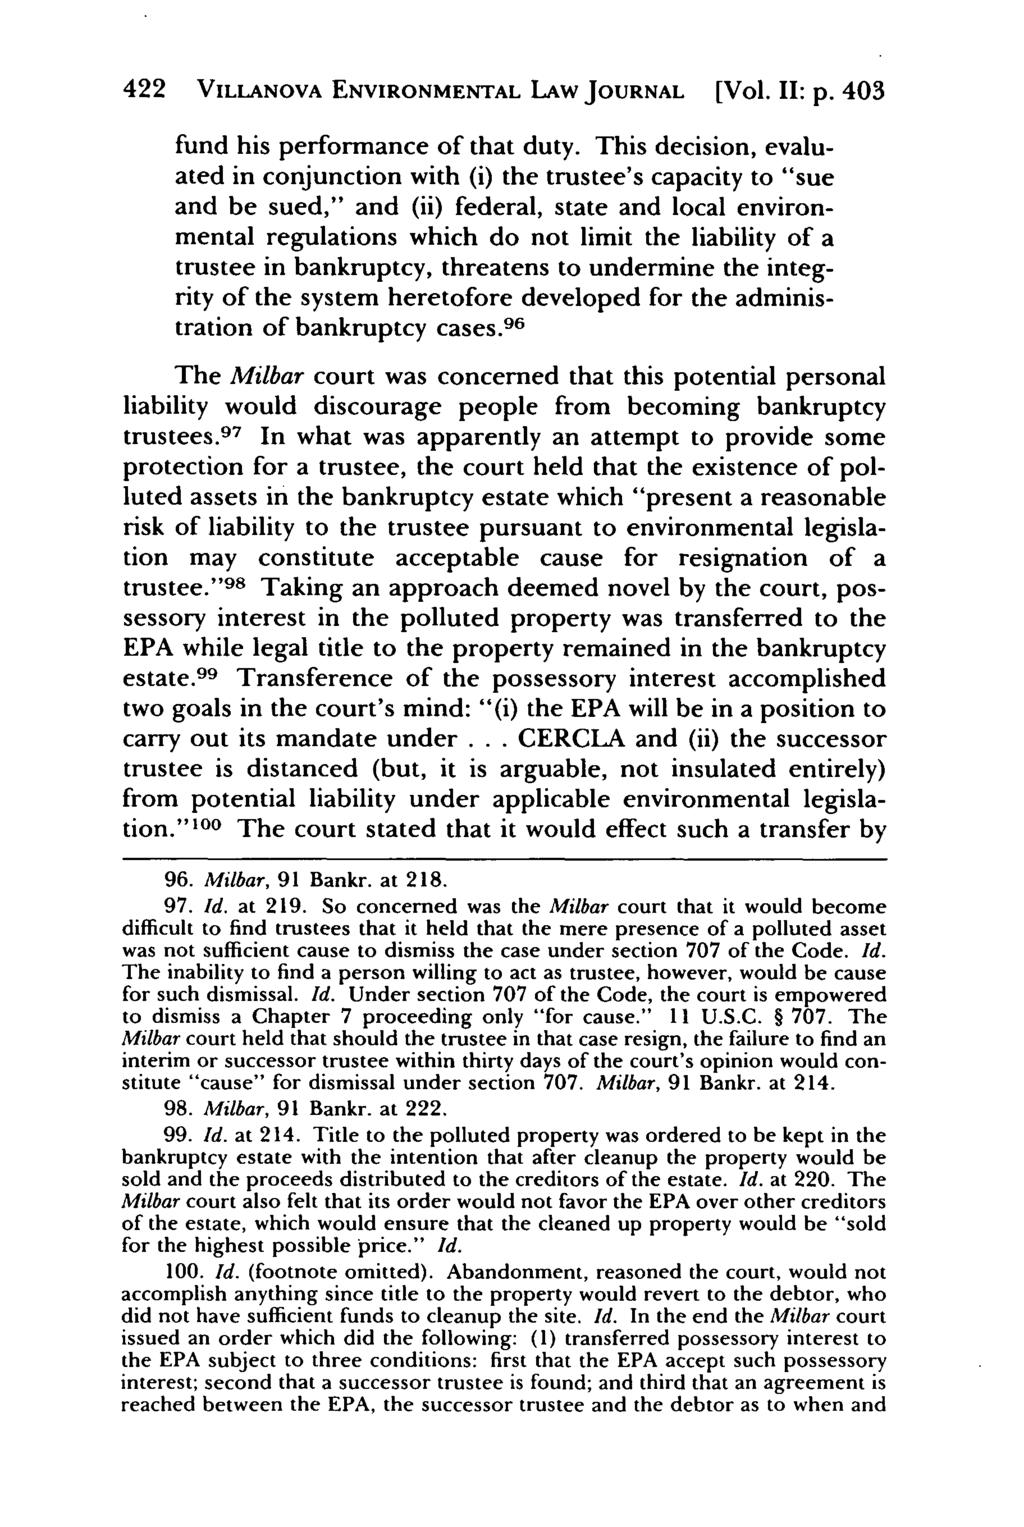 Villanova Environmental Law Journal, Vol. 2, Iss. 2 [1991], Art. 5 422 VILLANOVA ENVIRONMENTAL LAW JOURNAL [Vol. II: p. 403 fund his performance of that duty.